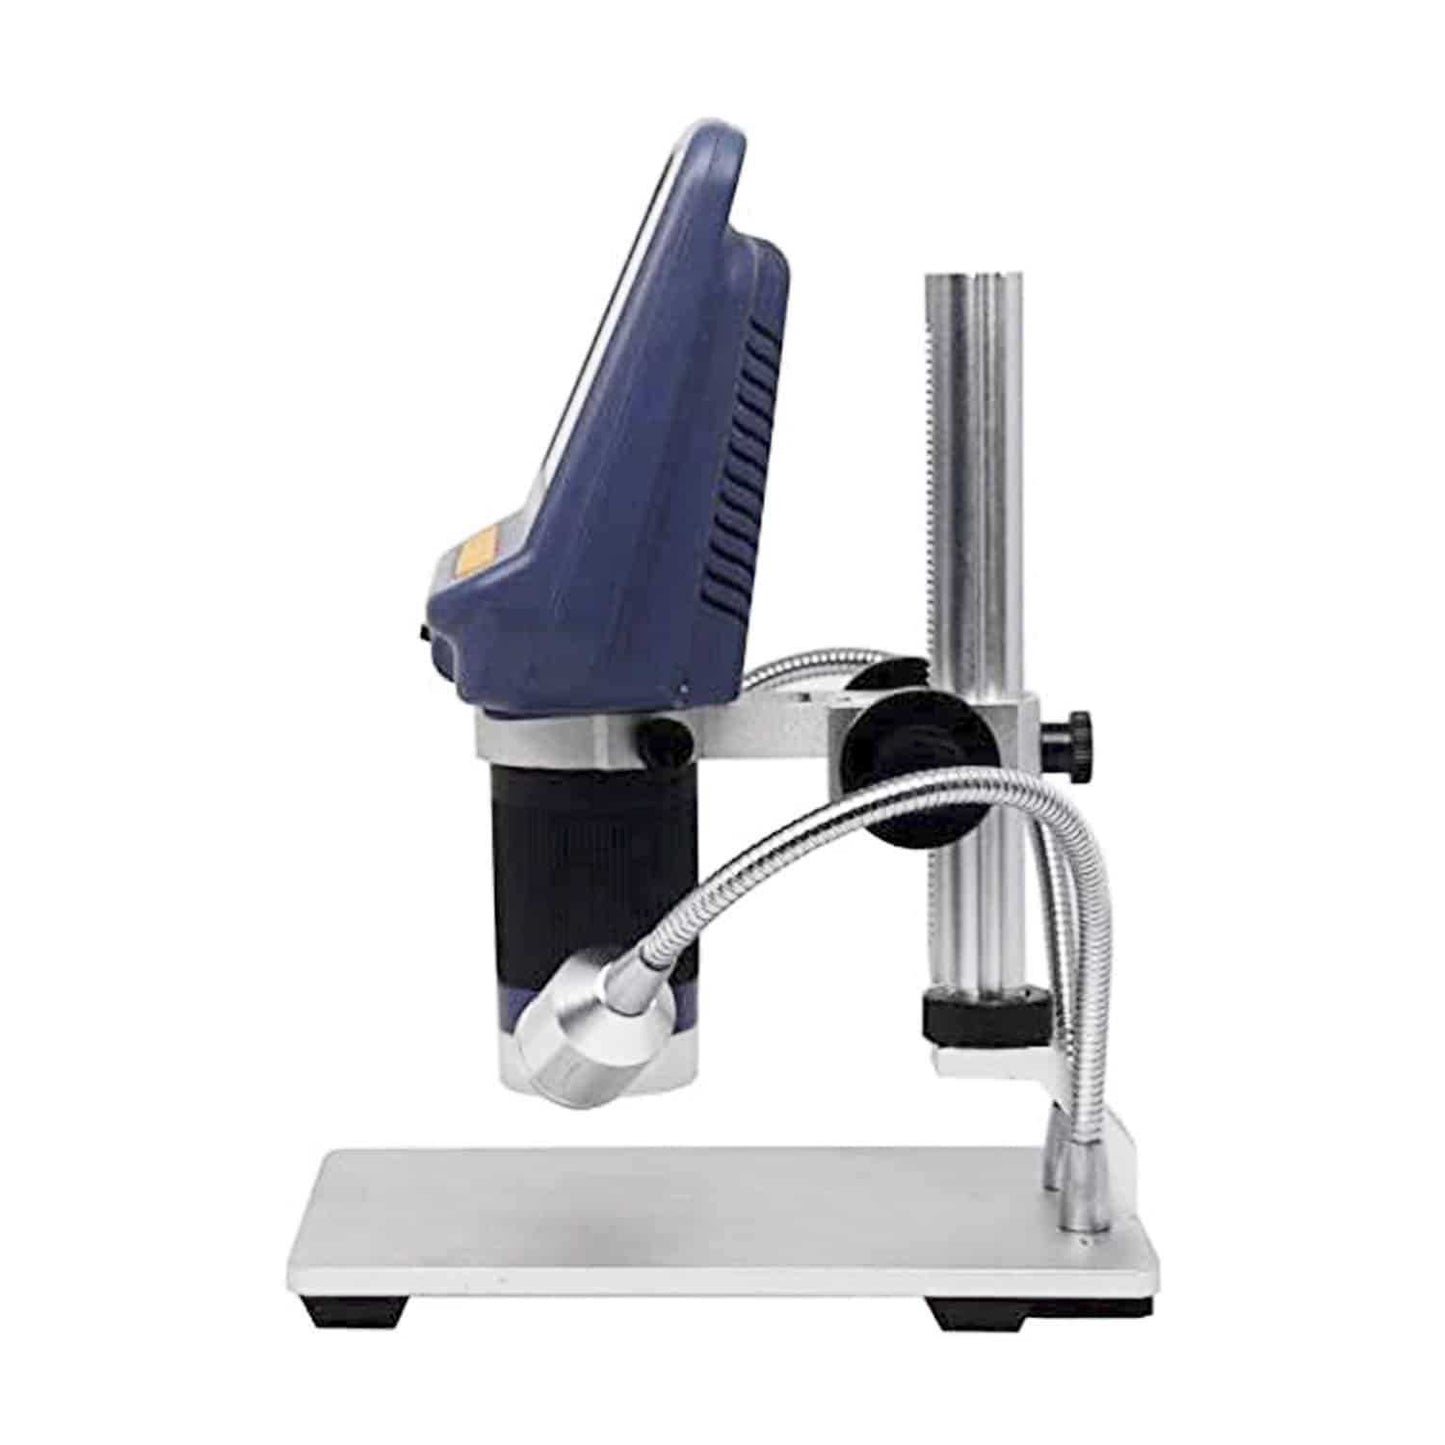 Andonstar AD106S Digital Microscope with Classic Ergonomic Design